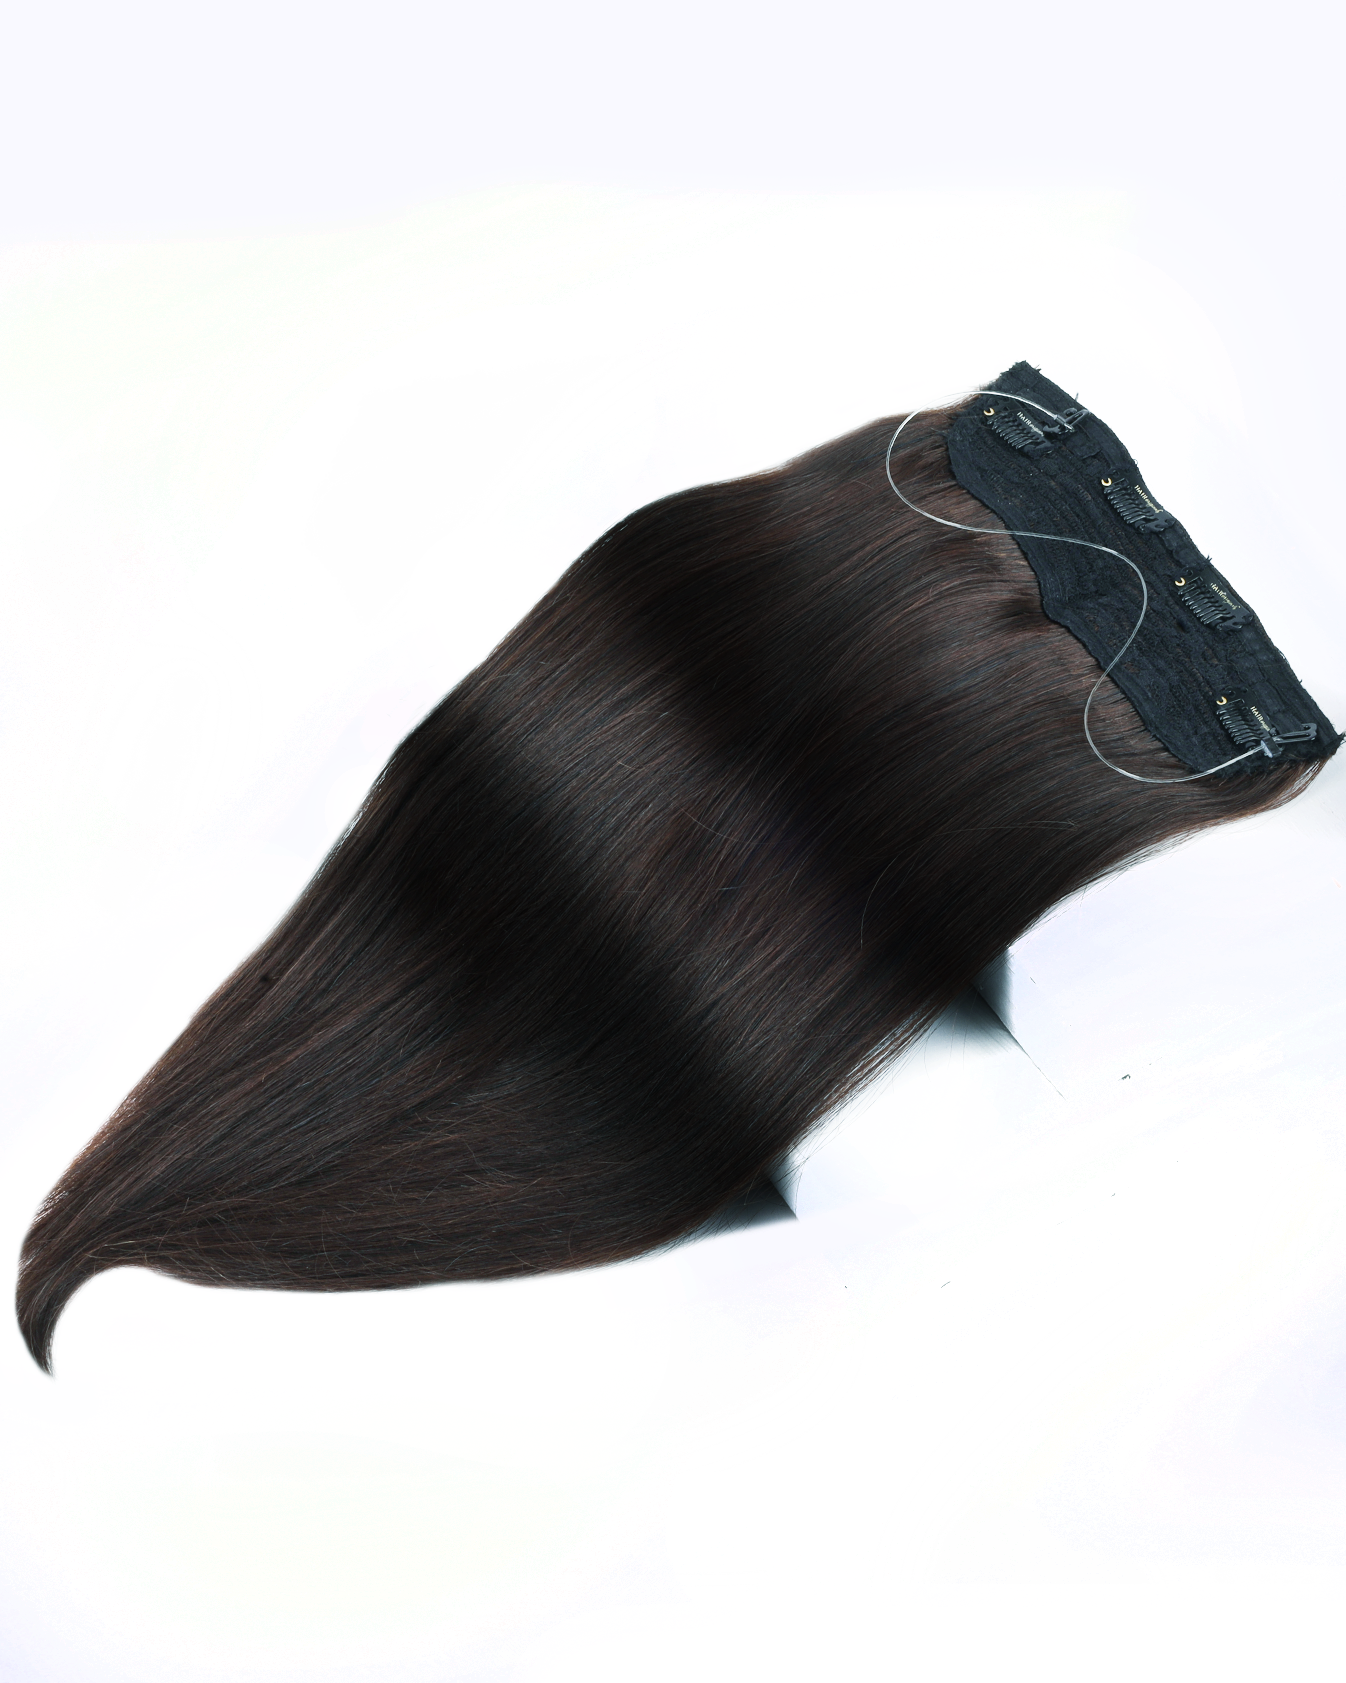 Halo Hair Extensions  HairOriginals 26 Inch Natural Black 